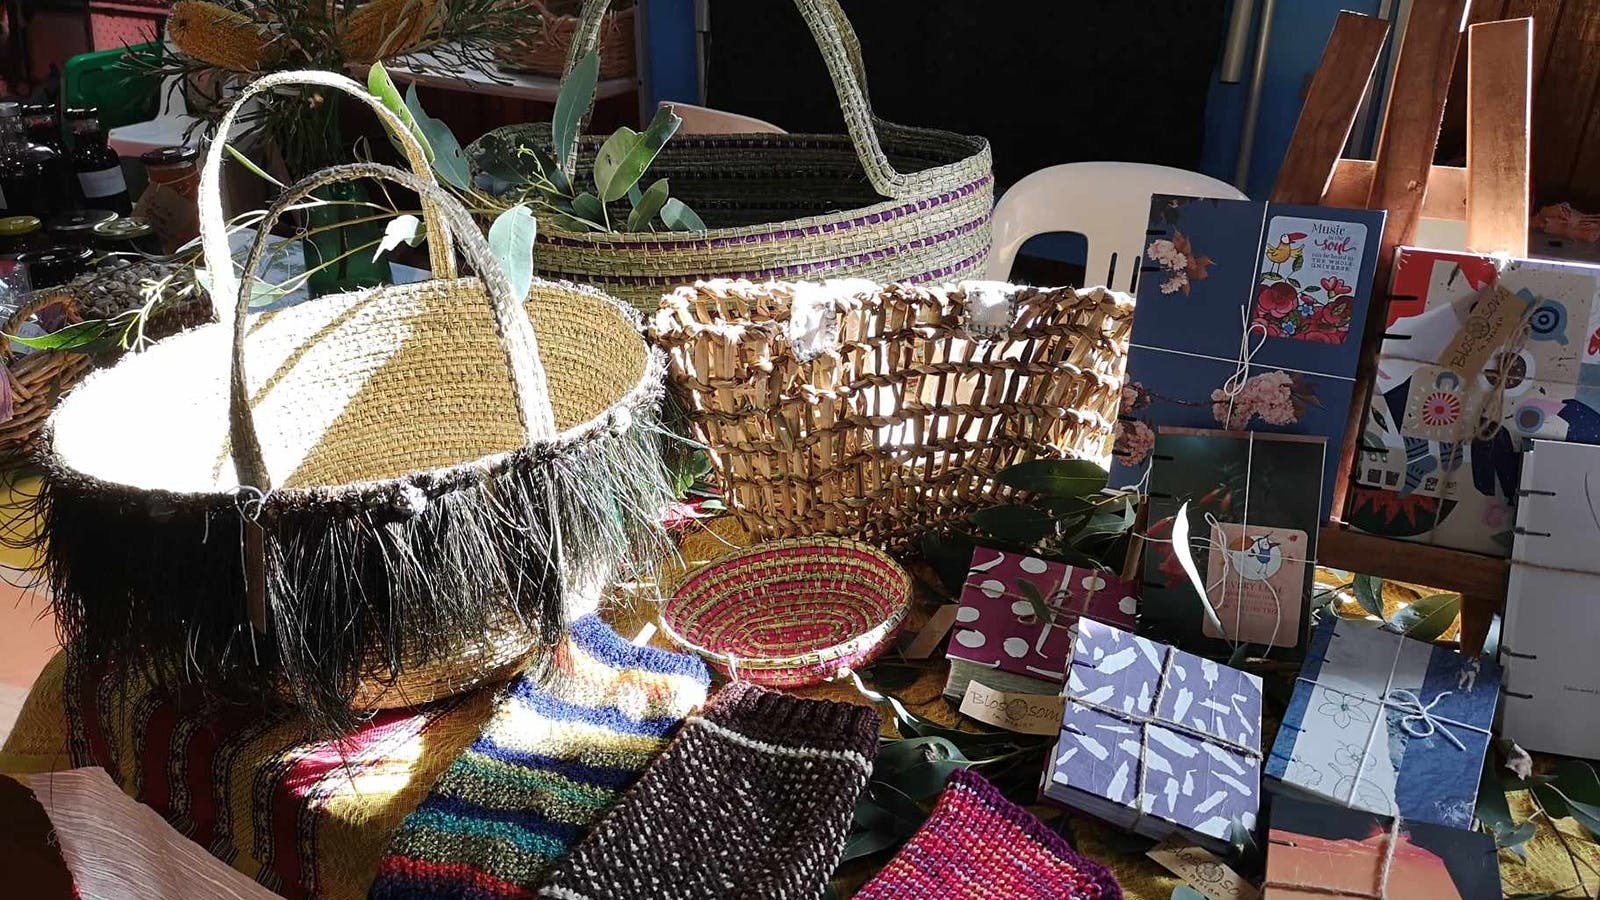 Zanja Blossom's gorgeous woven baskets and handmade books